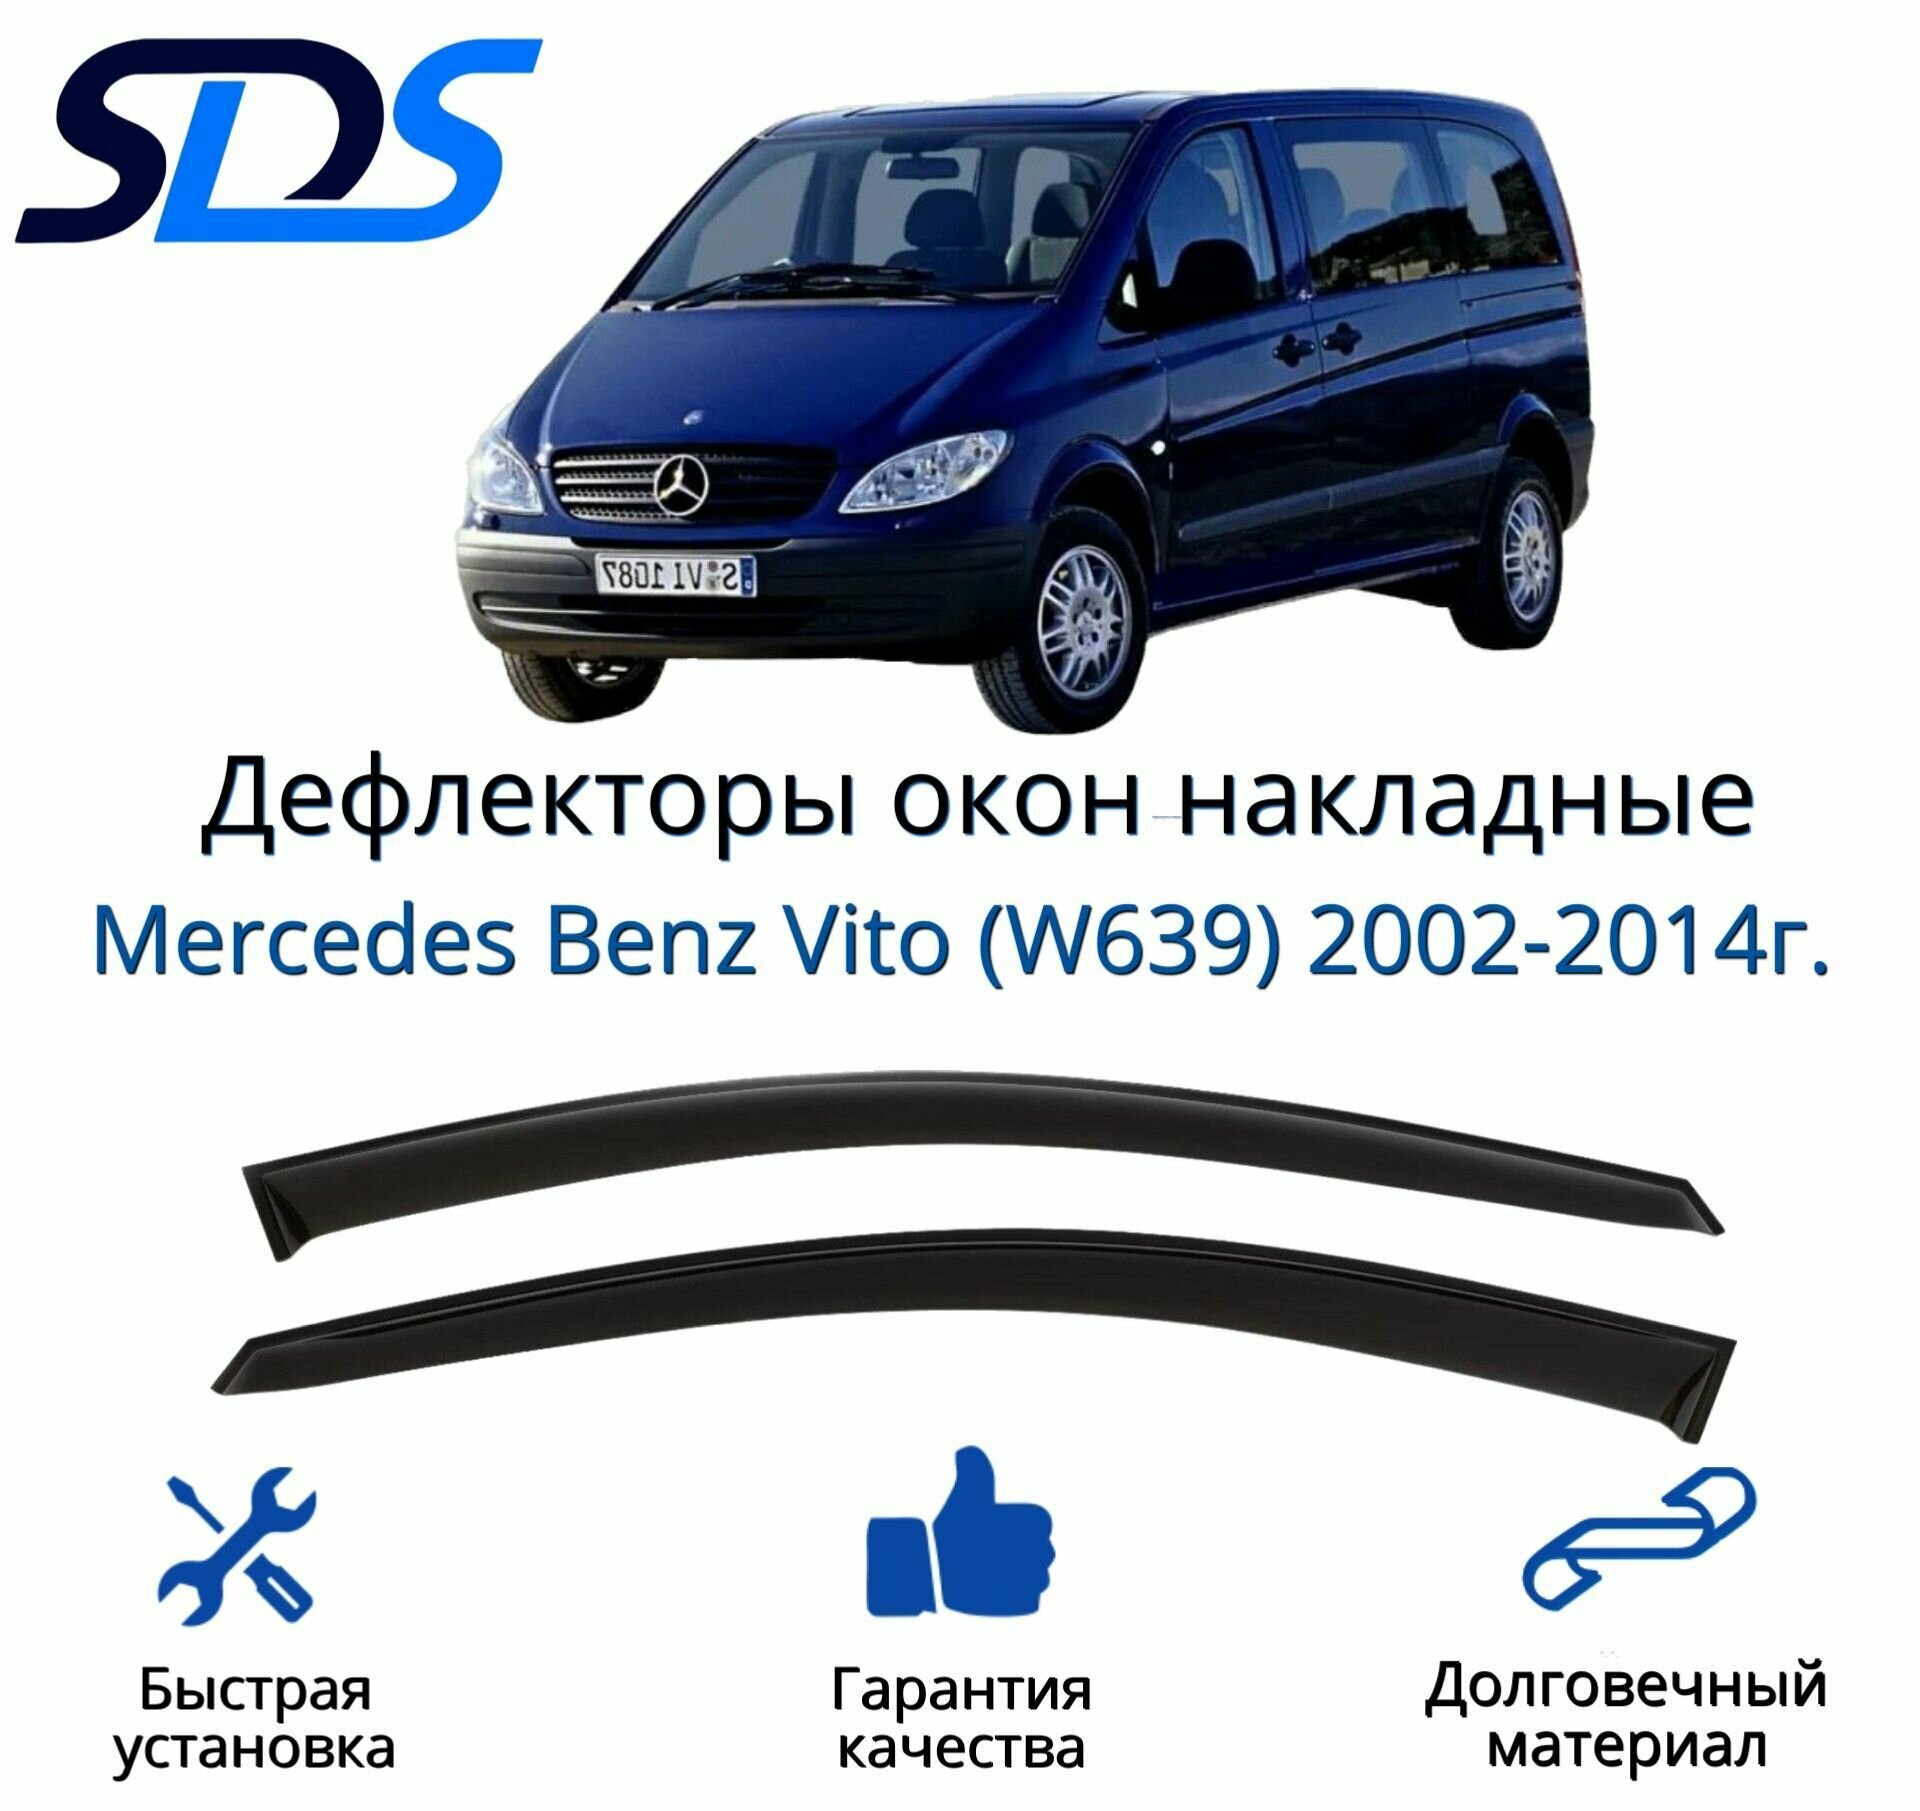 Дефлекторы окон (ветровики) для Mercedes Benz Vito (W639) 2002-2014г.